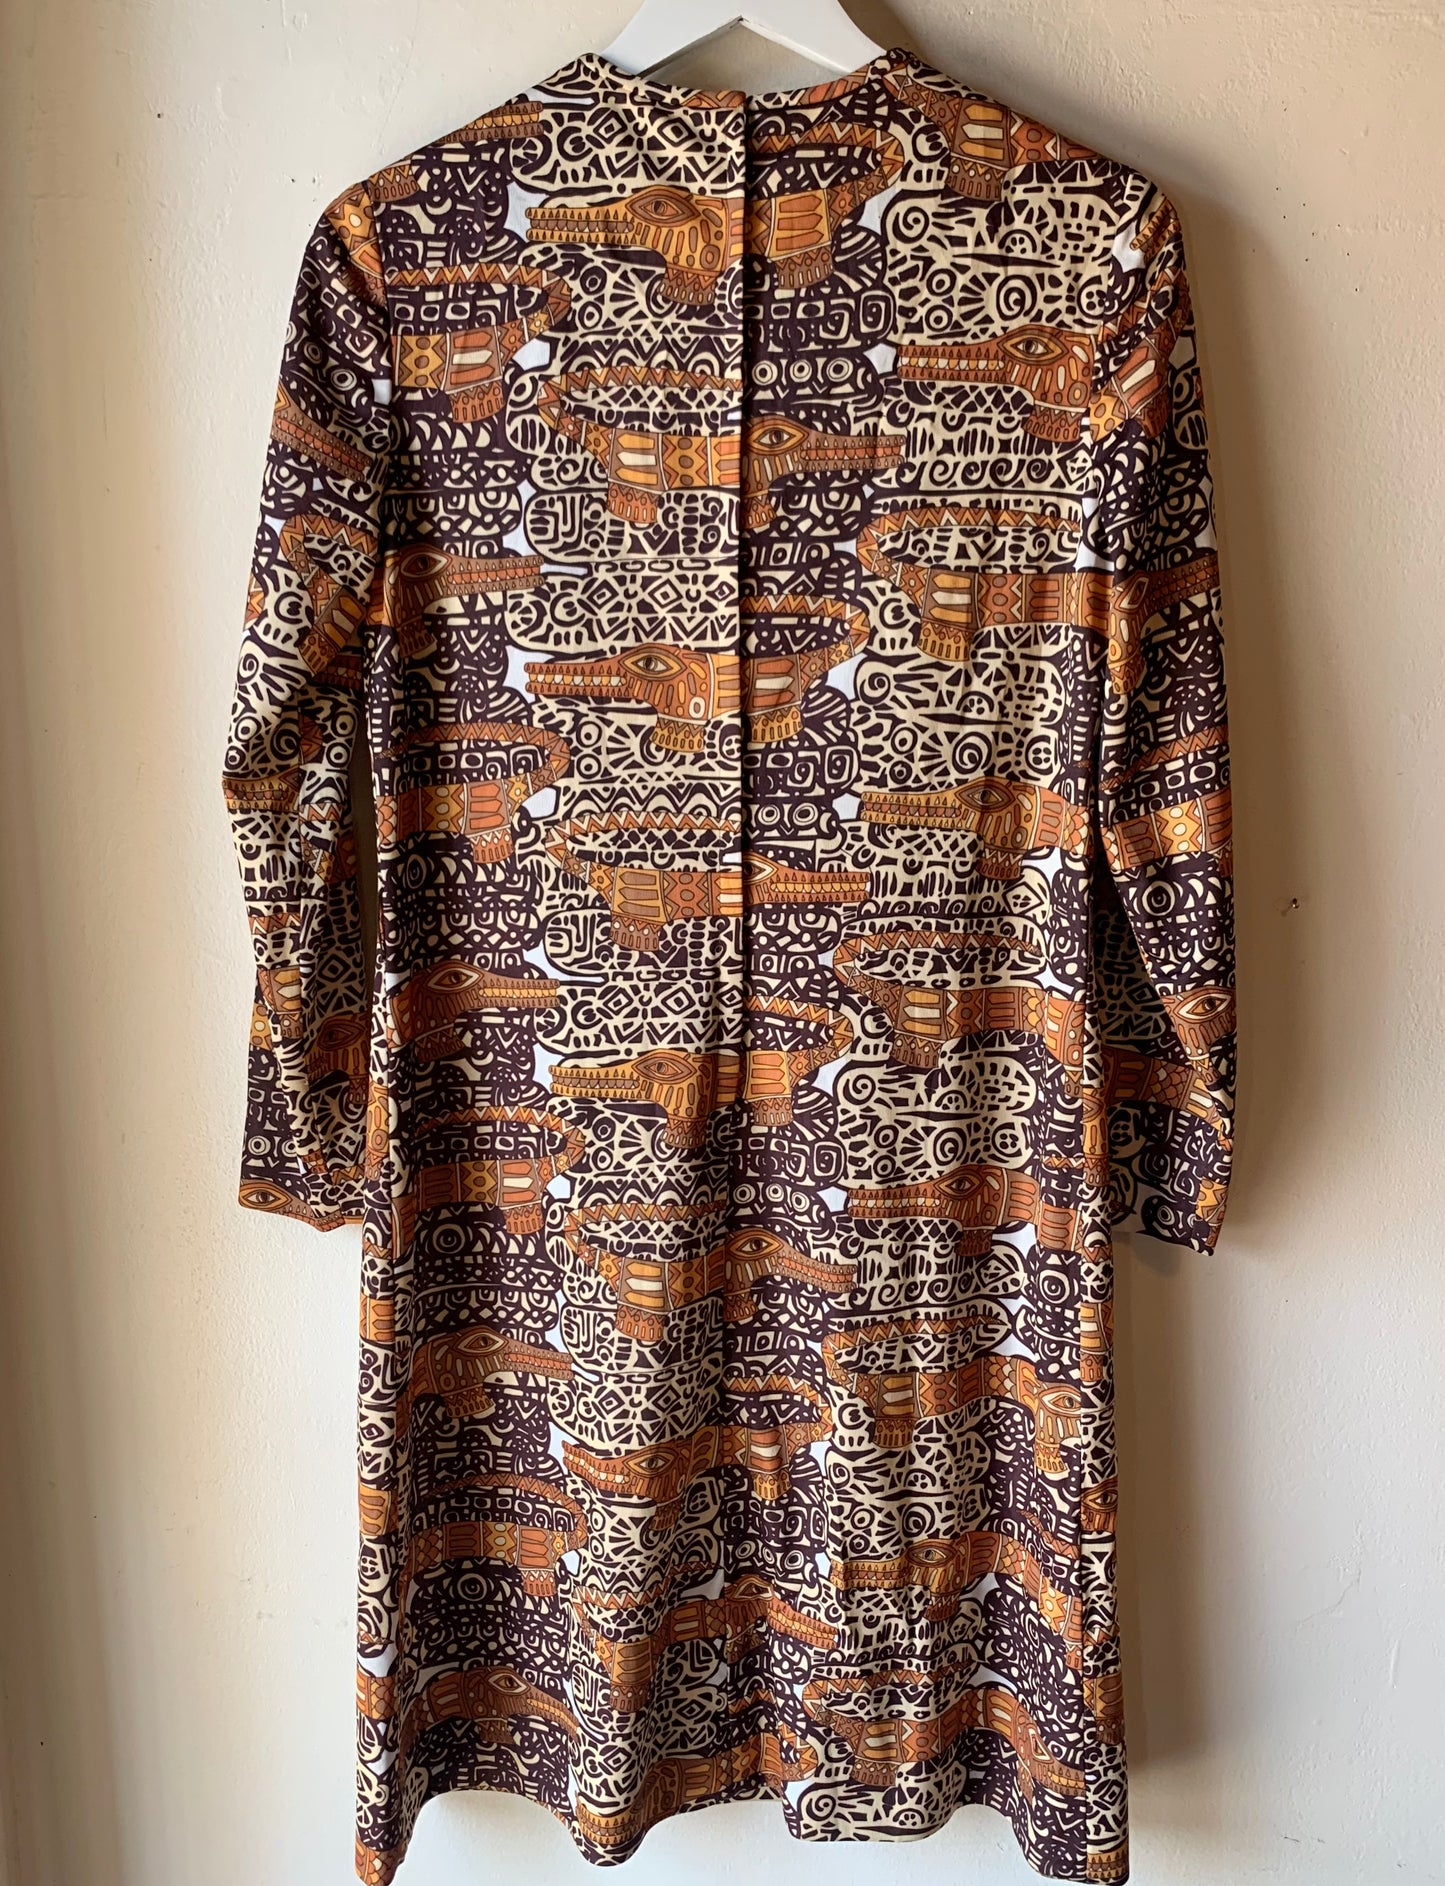 1970s Crocodile Print Dress (M/L)